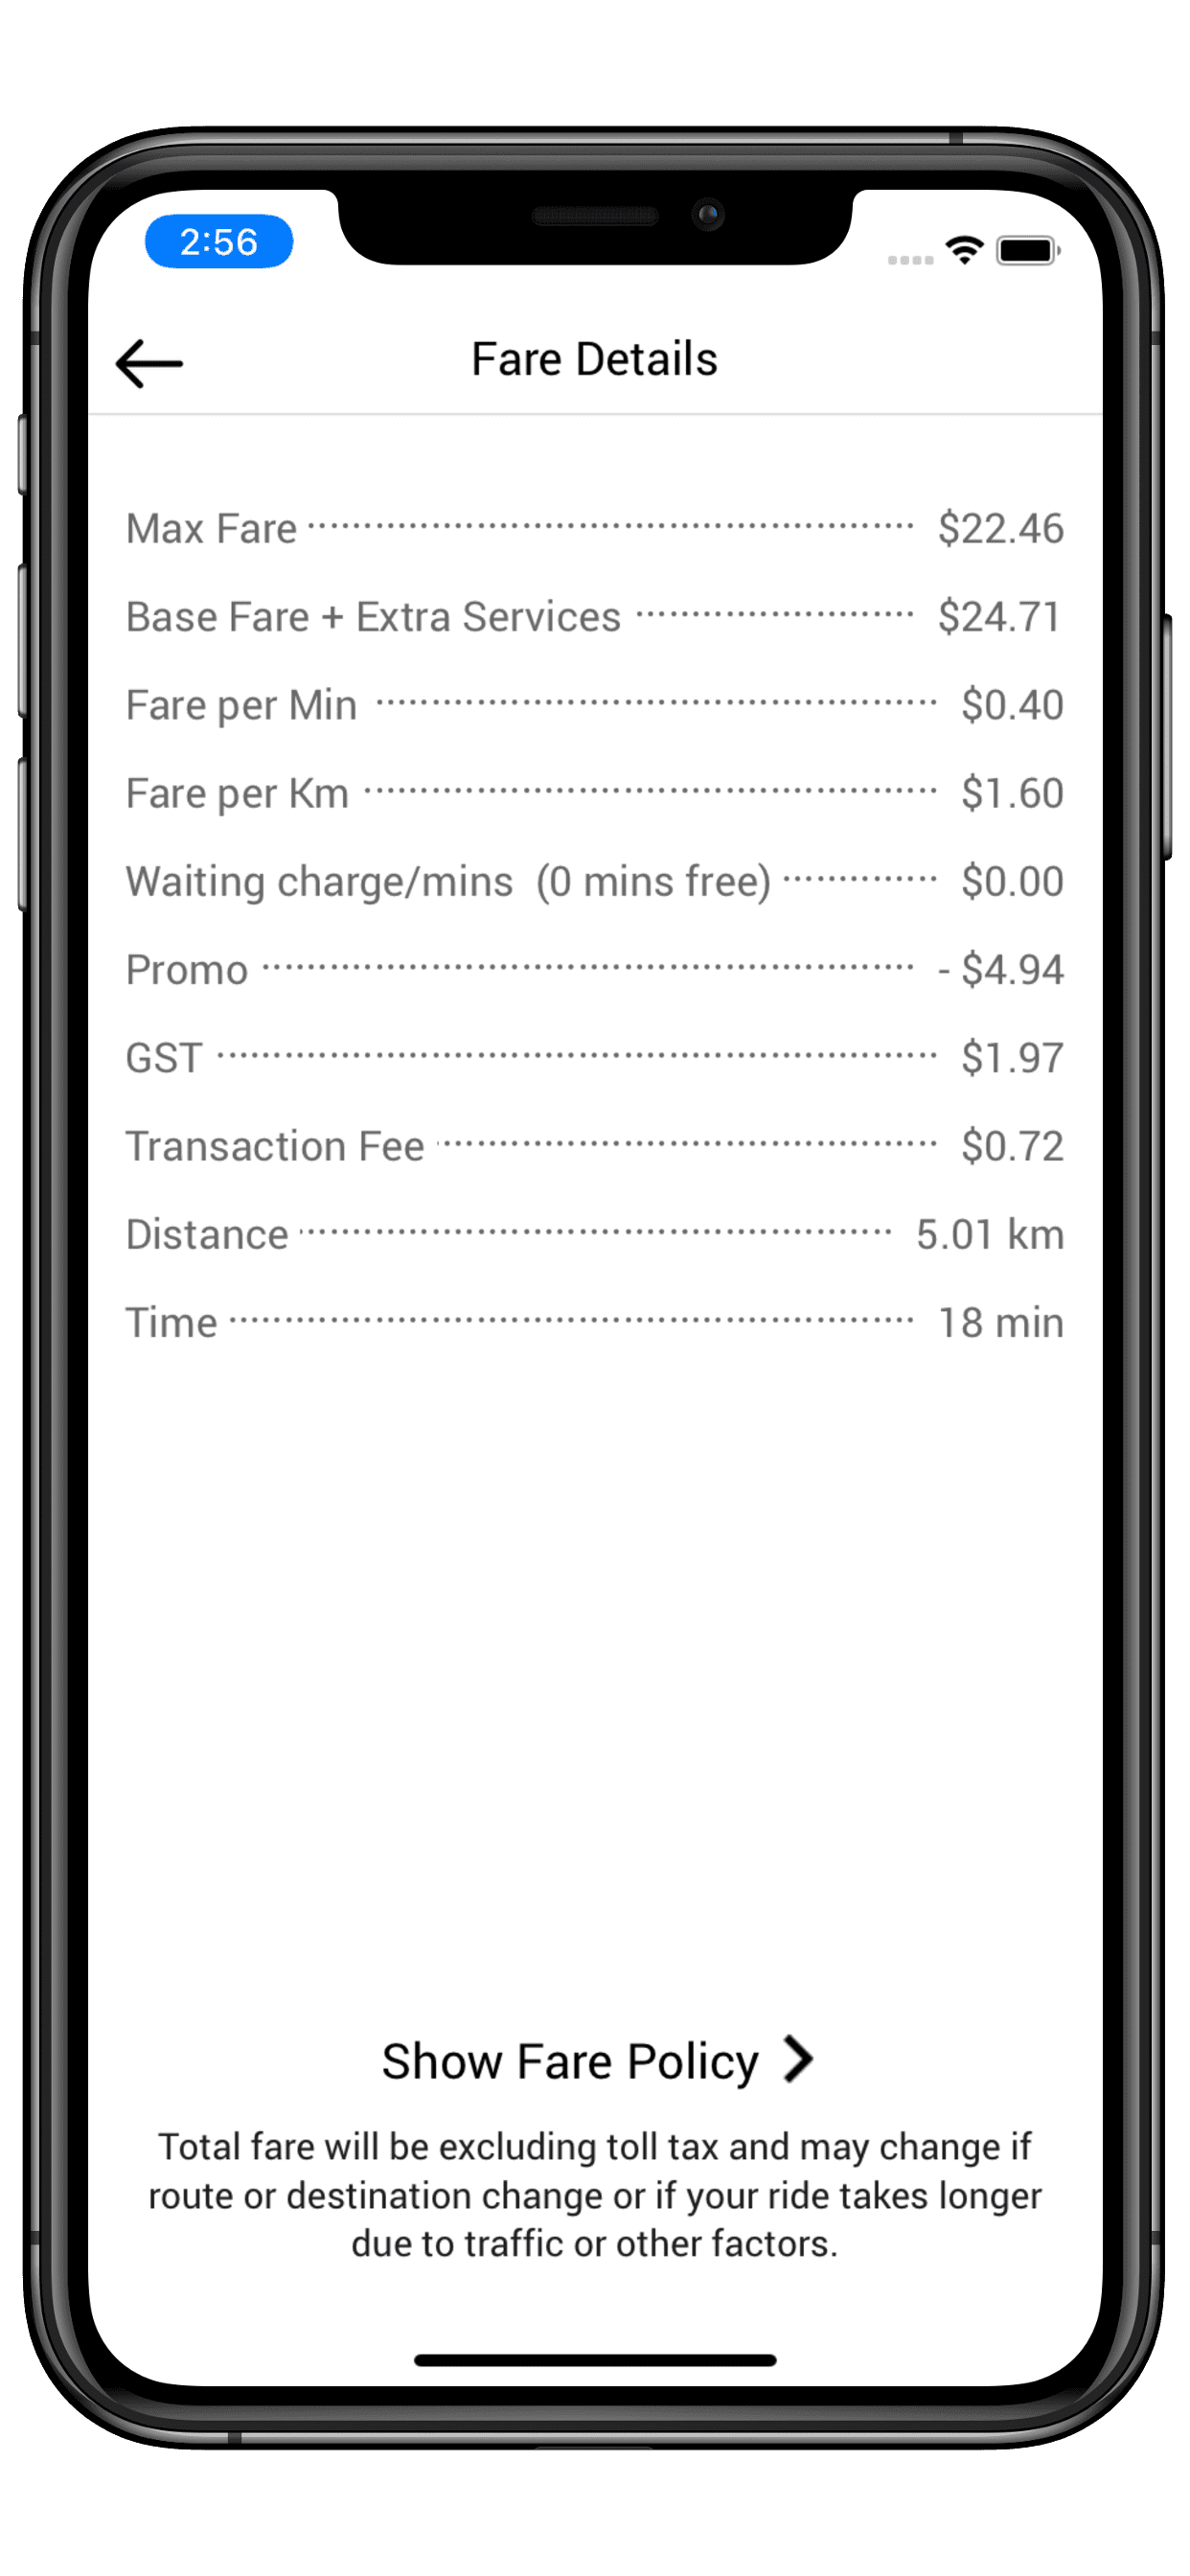 taxi app development